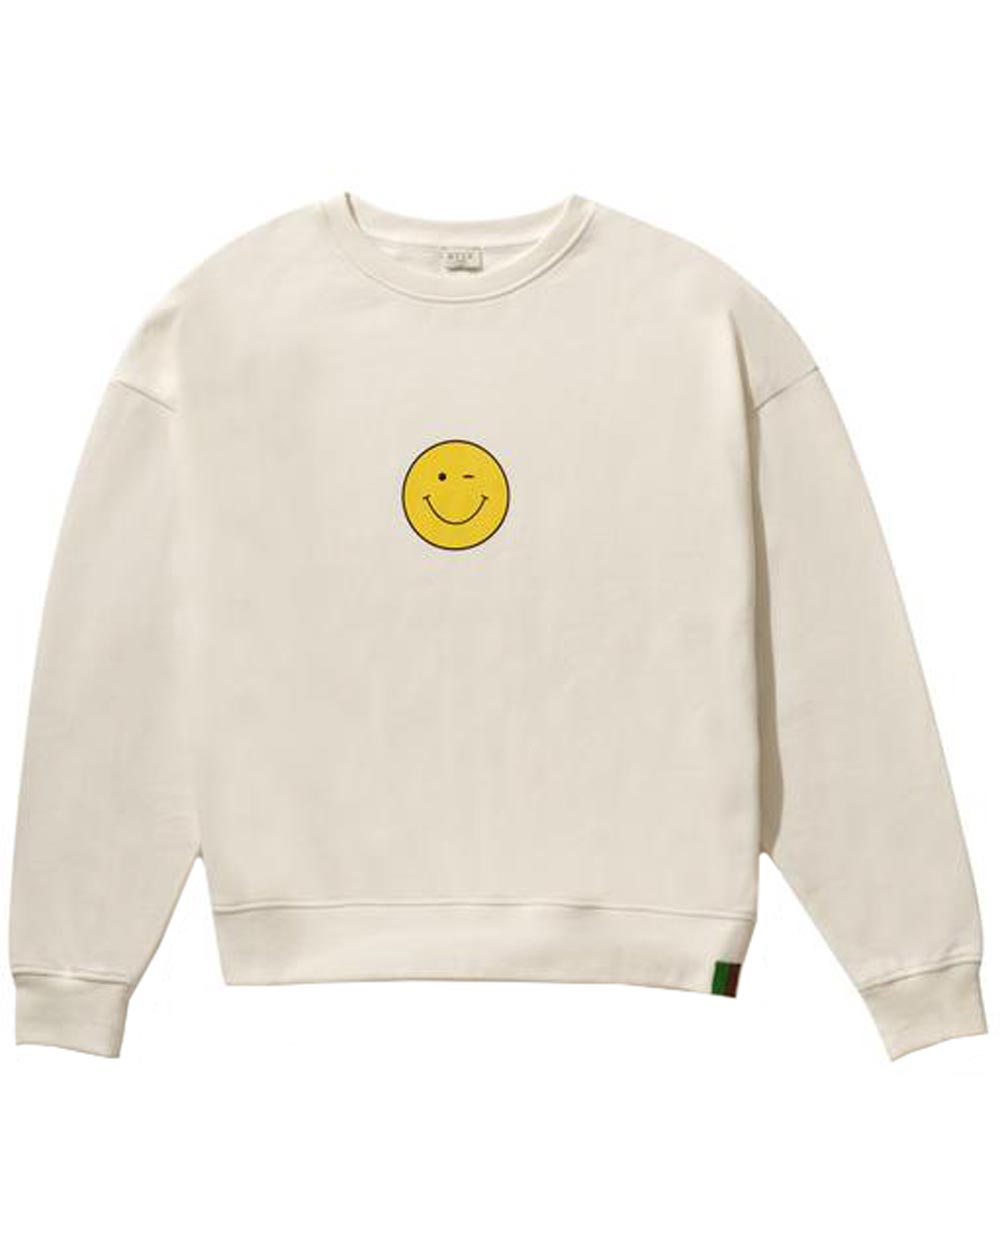 The Organic Winkey Smile Sweatshirt in Cream